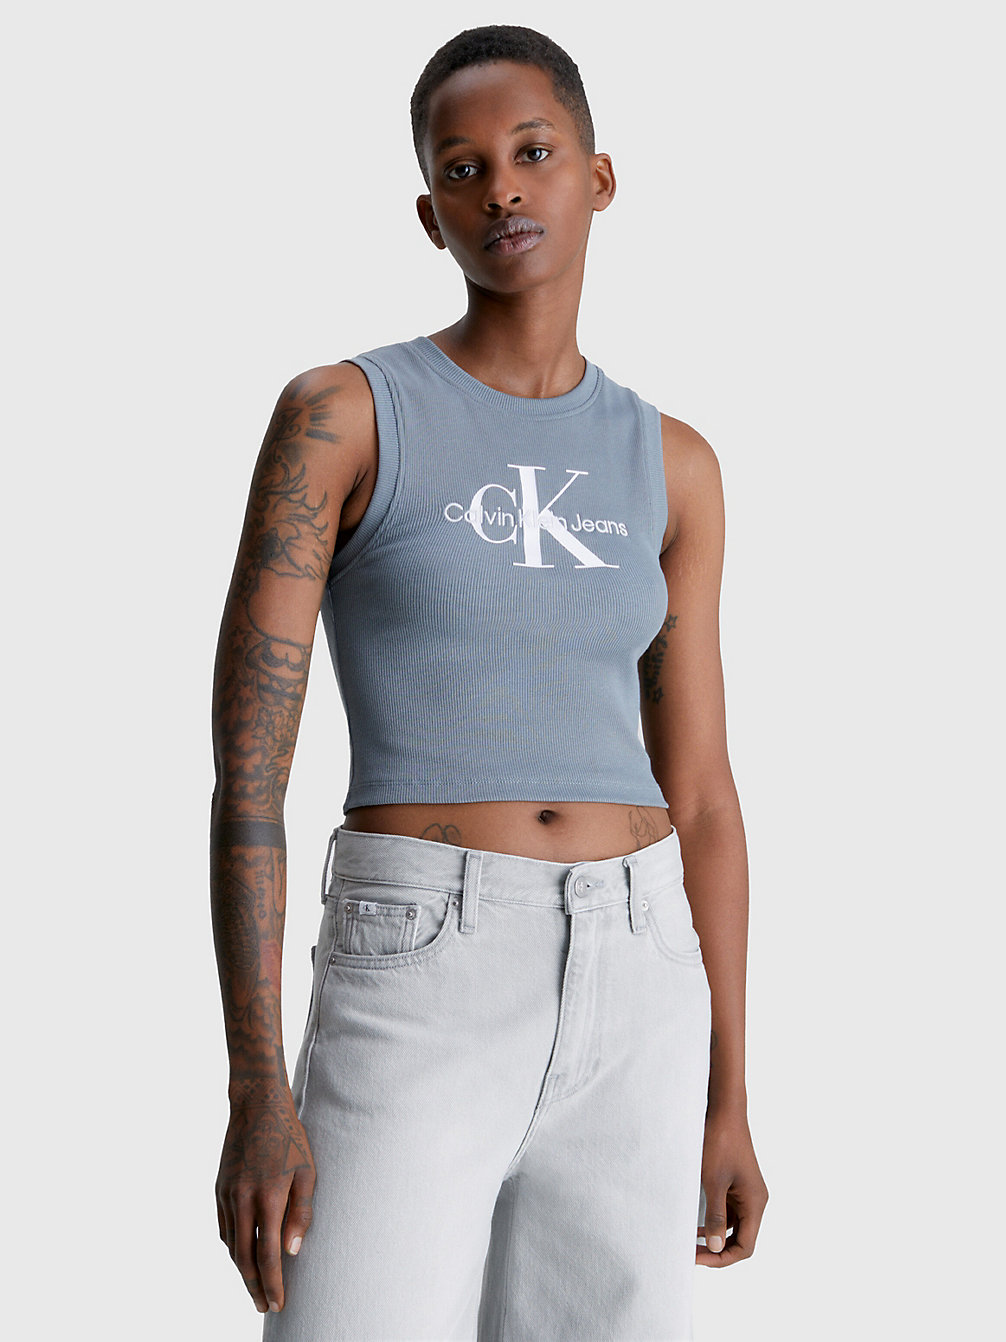 OVERCAST GREY Cropped Monogram Tank Top undefined women Calvin Klein